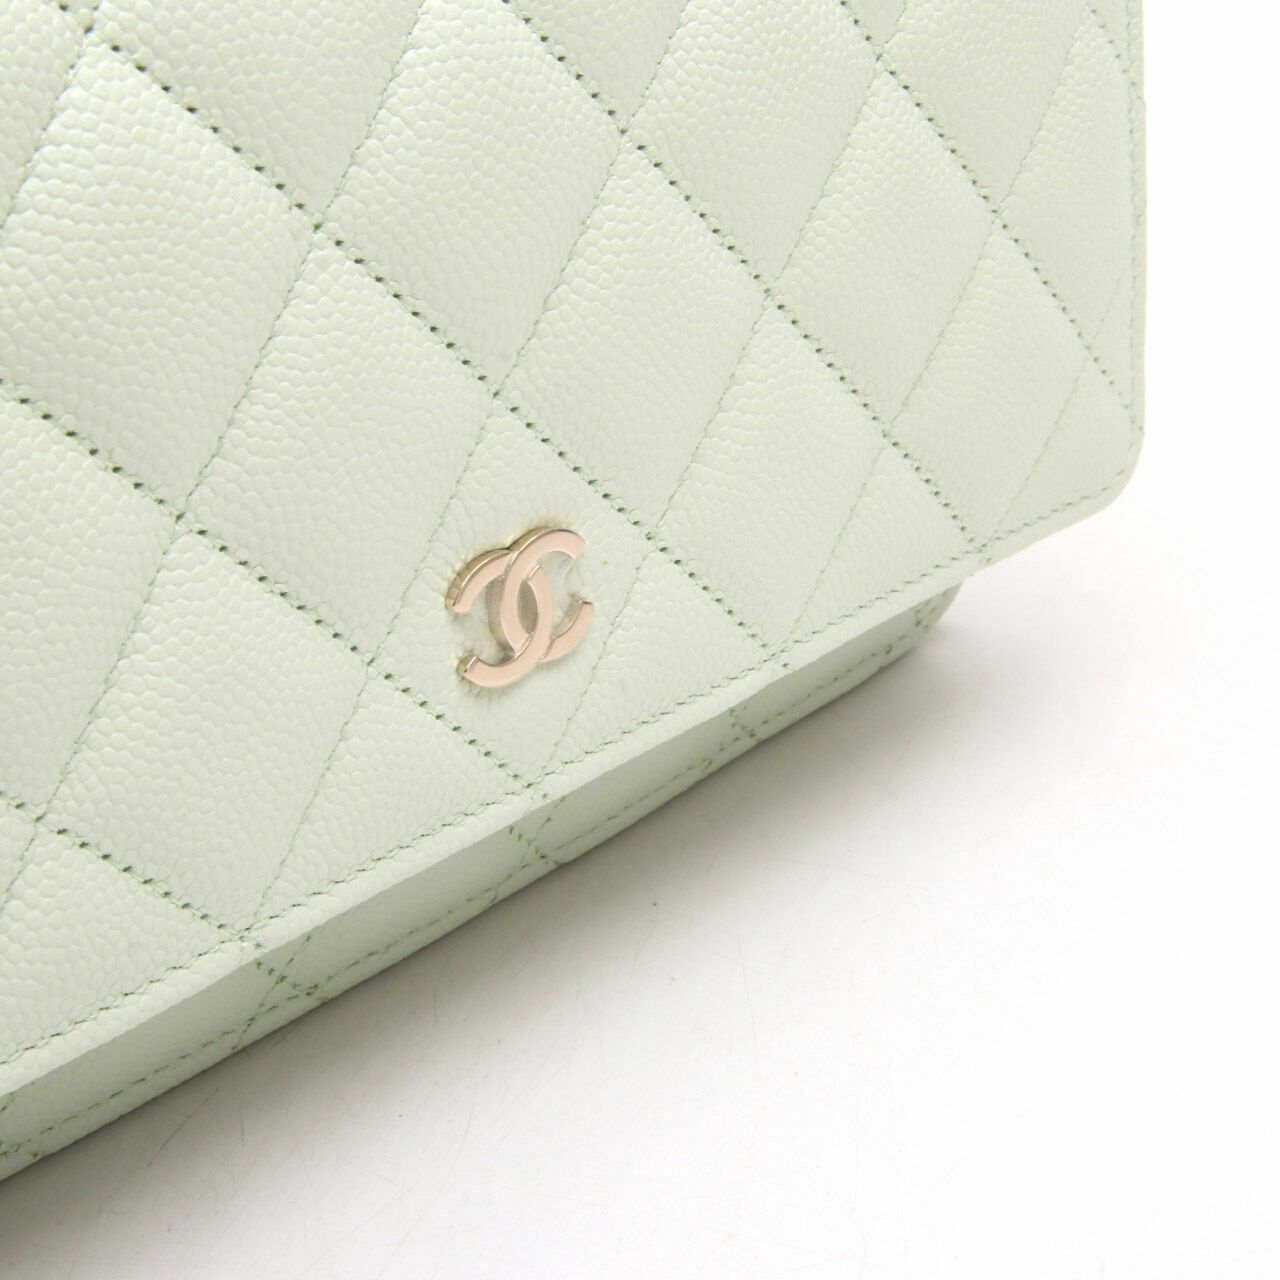 Chanel Light Green Caviar Wallet On Chain GHW Sling Bag